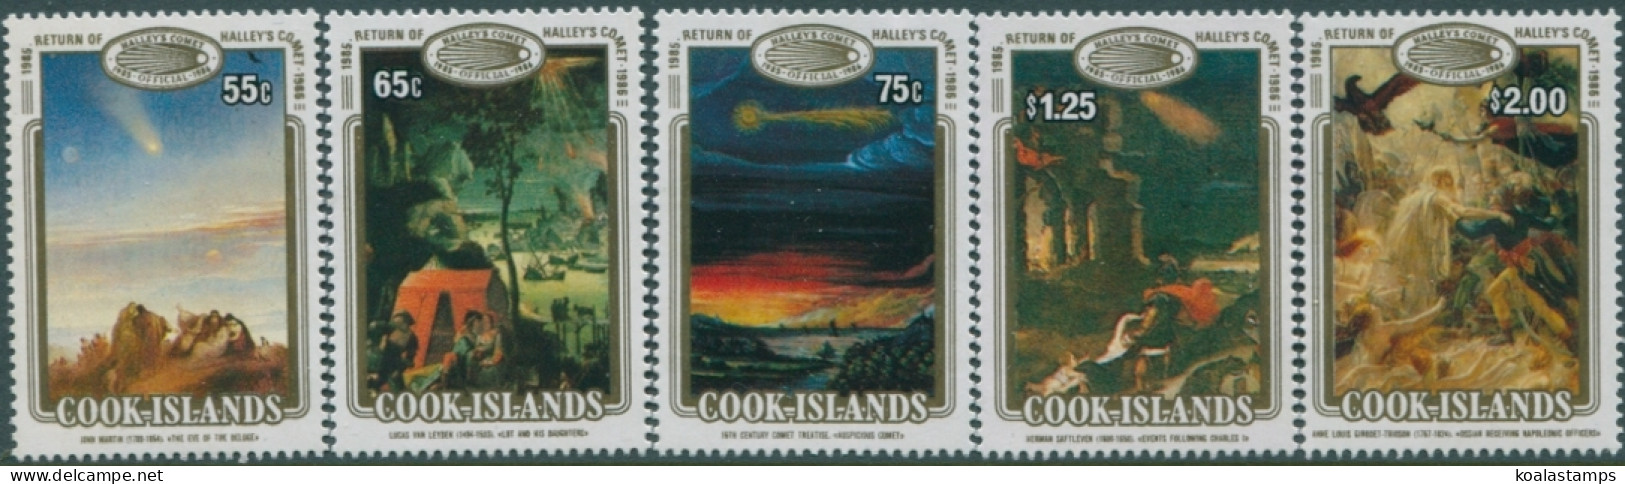 Cook Islands 1986 SG1058-1062 Halley's Comet Set MNH - Cookinseln